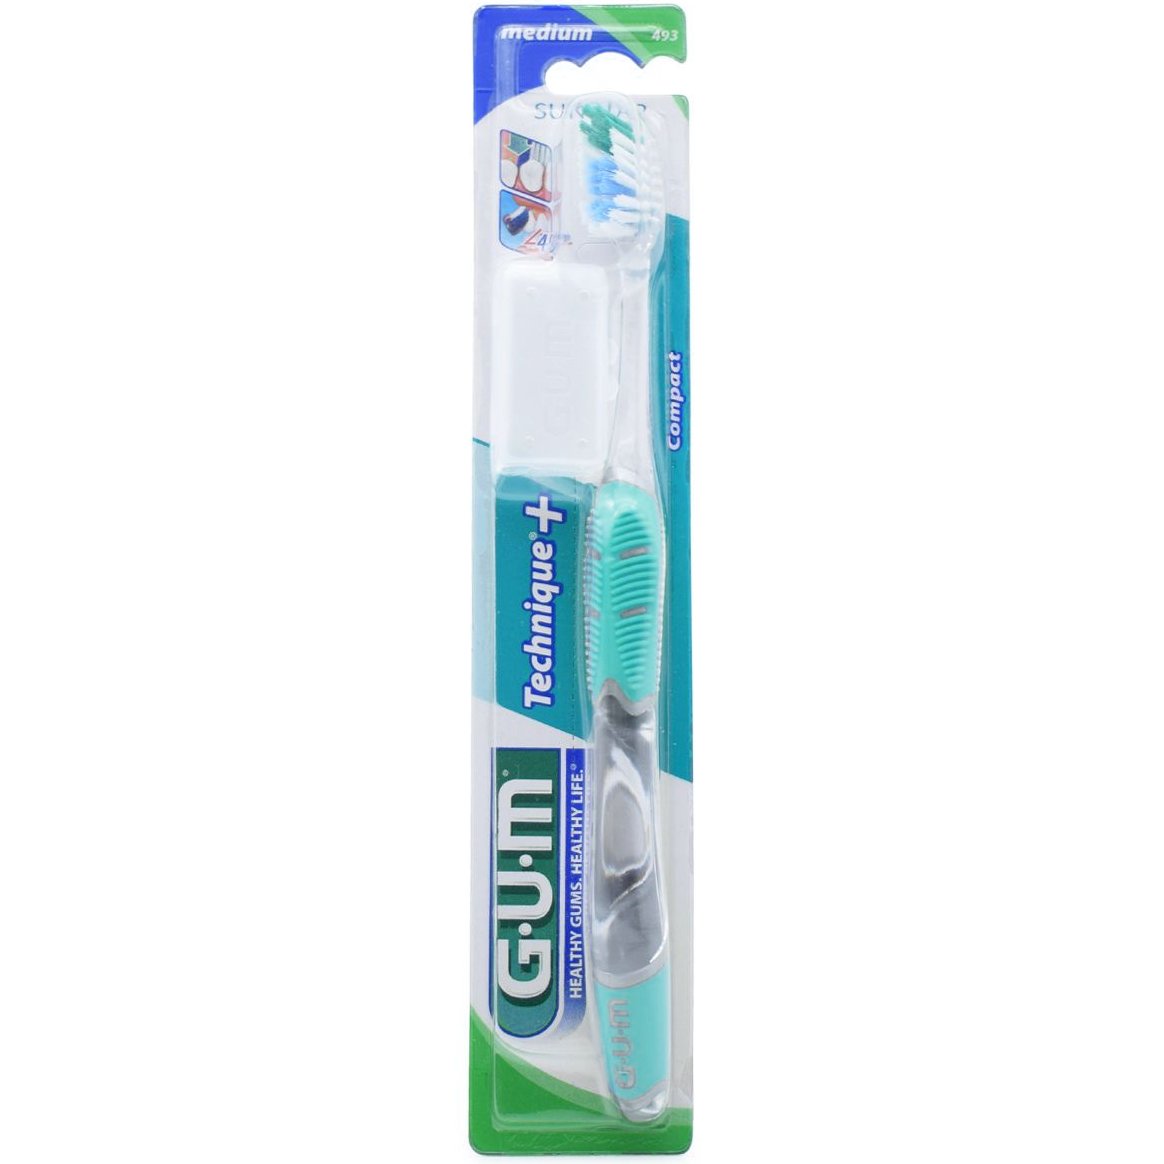 Gum Technique+ Compact Medium Toothbrush Χειροκίνητη Οδοντόβουρτσα Μέτρια με Θήκη Προστασίας 1 Τεμάχιο, Κωδ 493 – Γαλάζιο